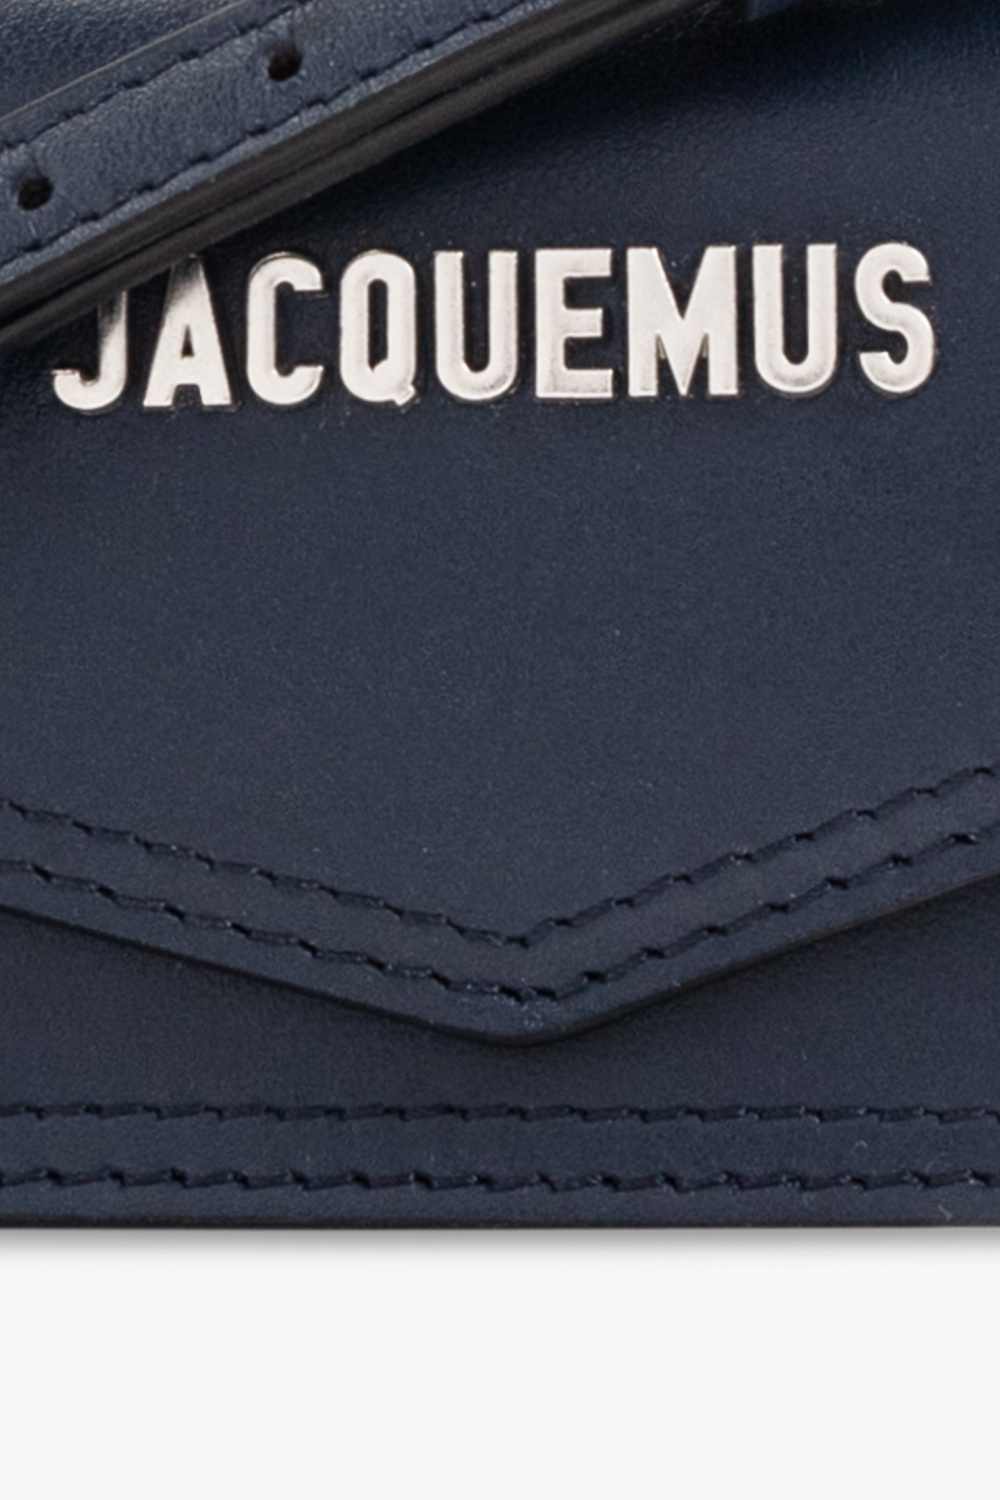 Jacquemus 'le Porte Azur' Strapped Pouch in Blue